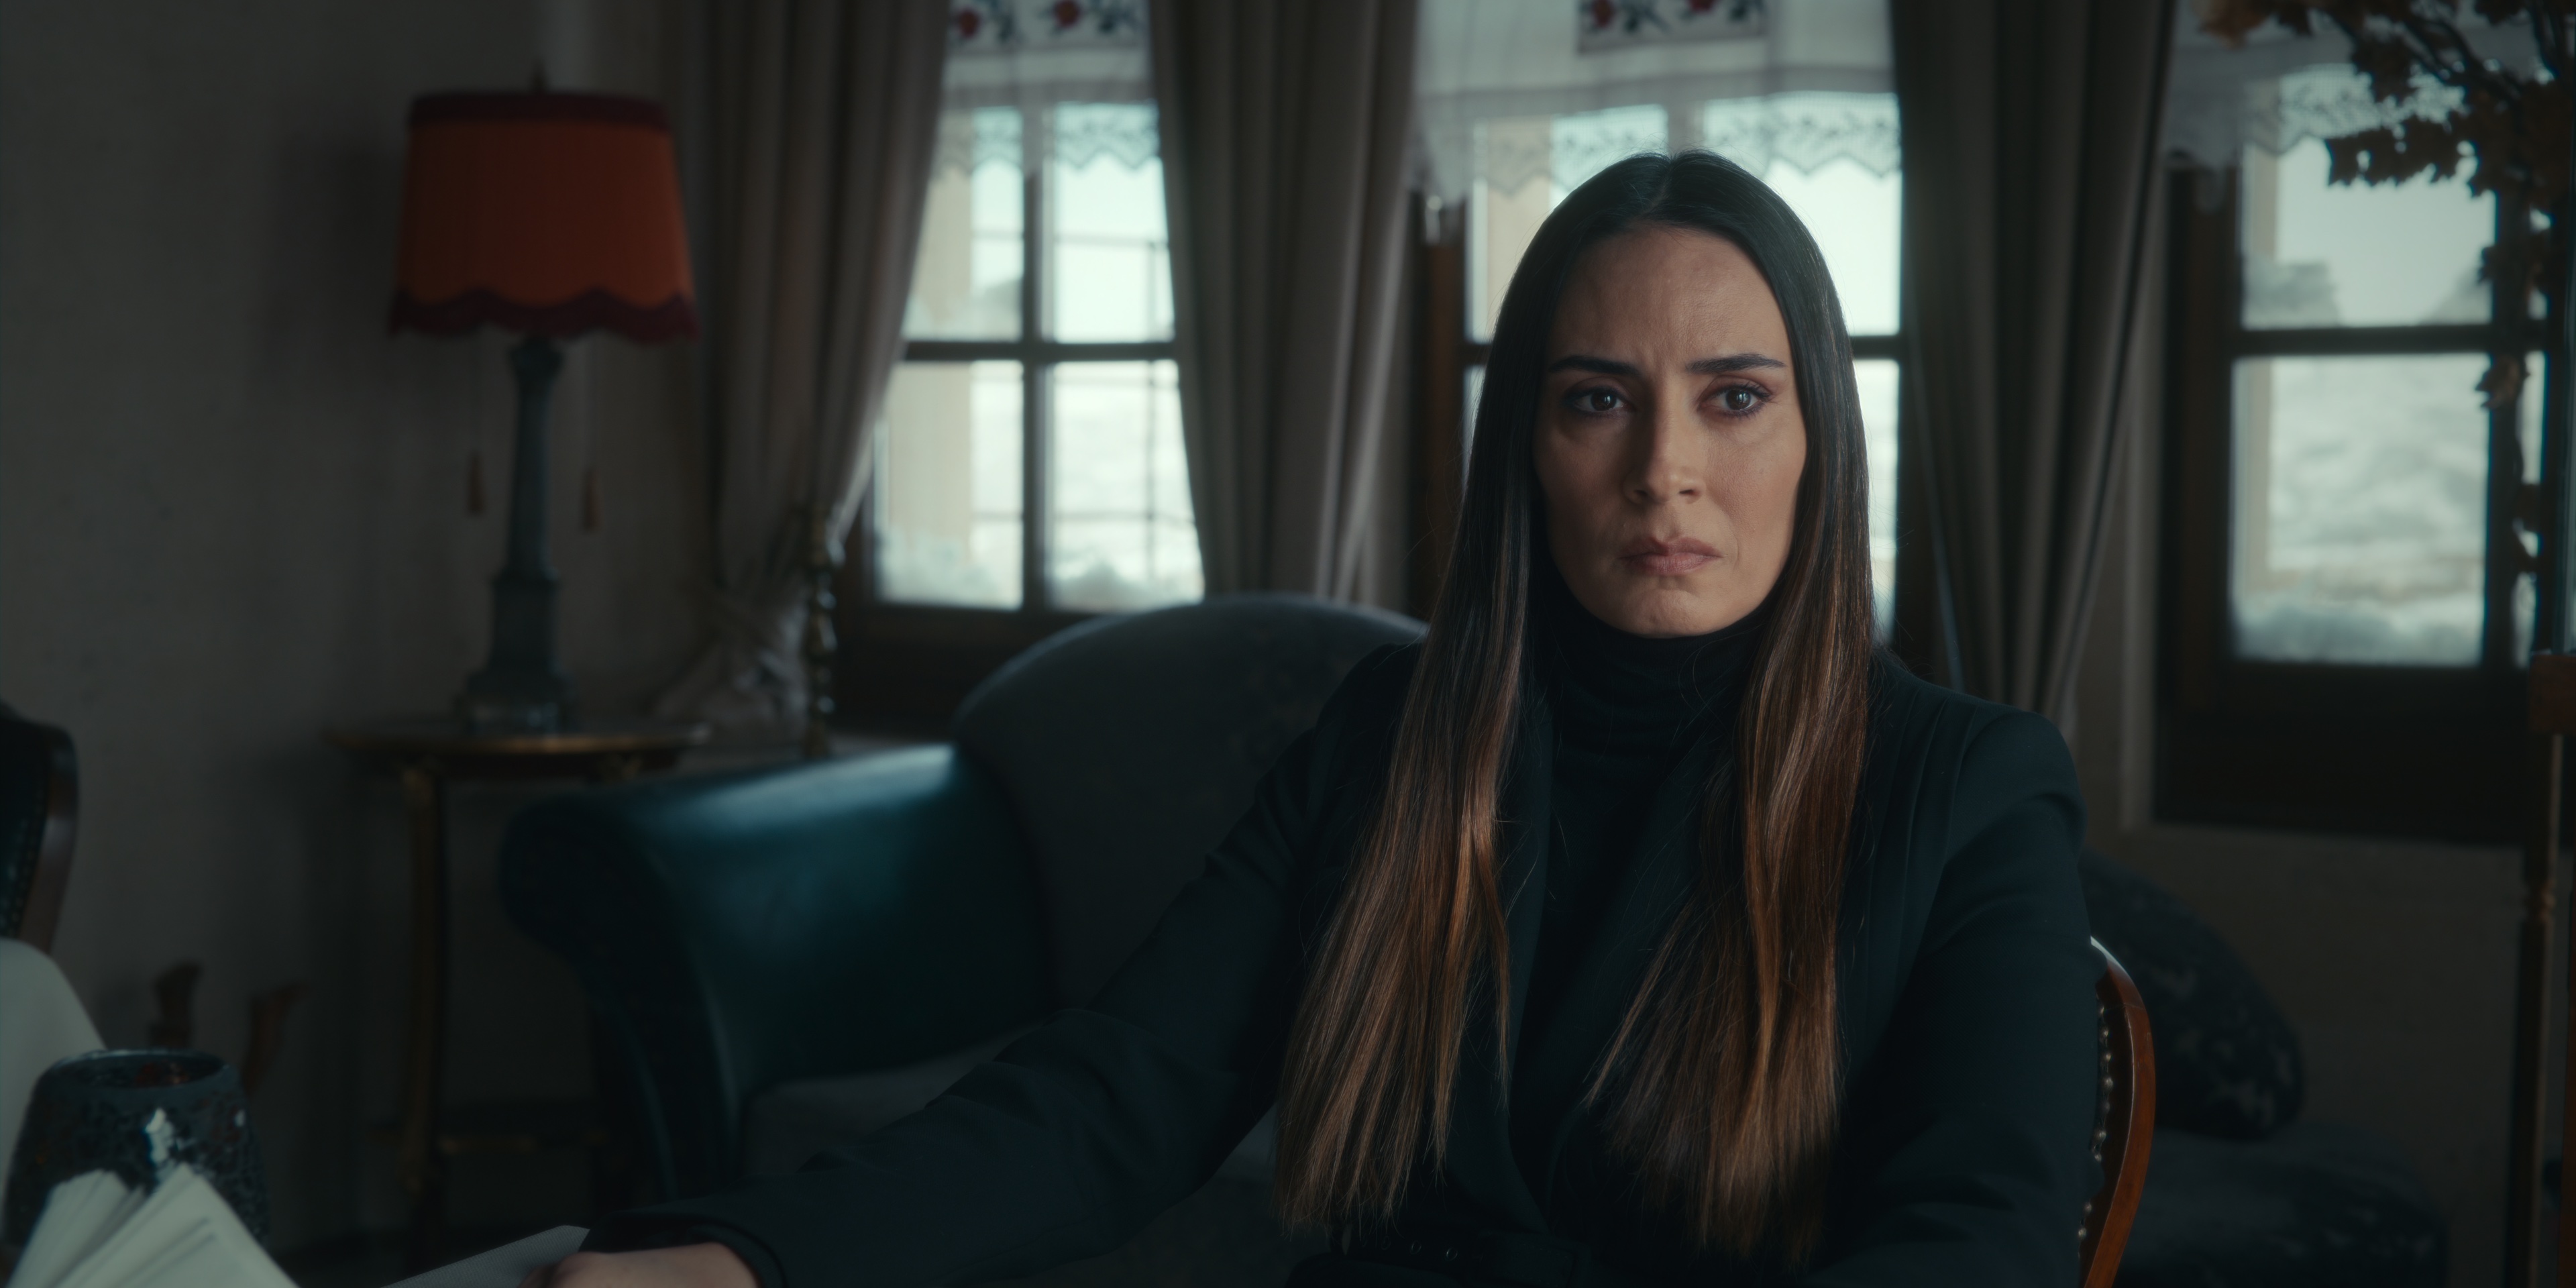 Who Were We Running From Cast on Netflix - Melisa Sözen as Mother